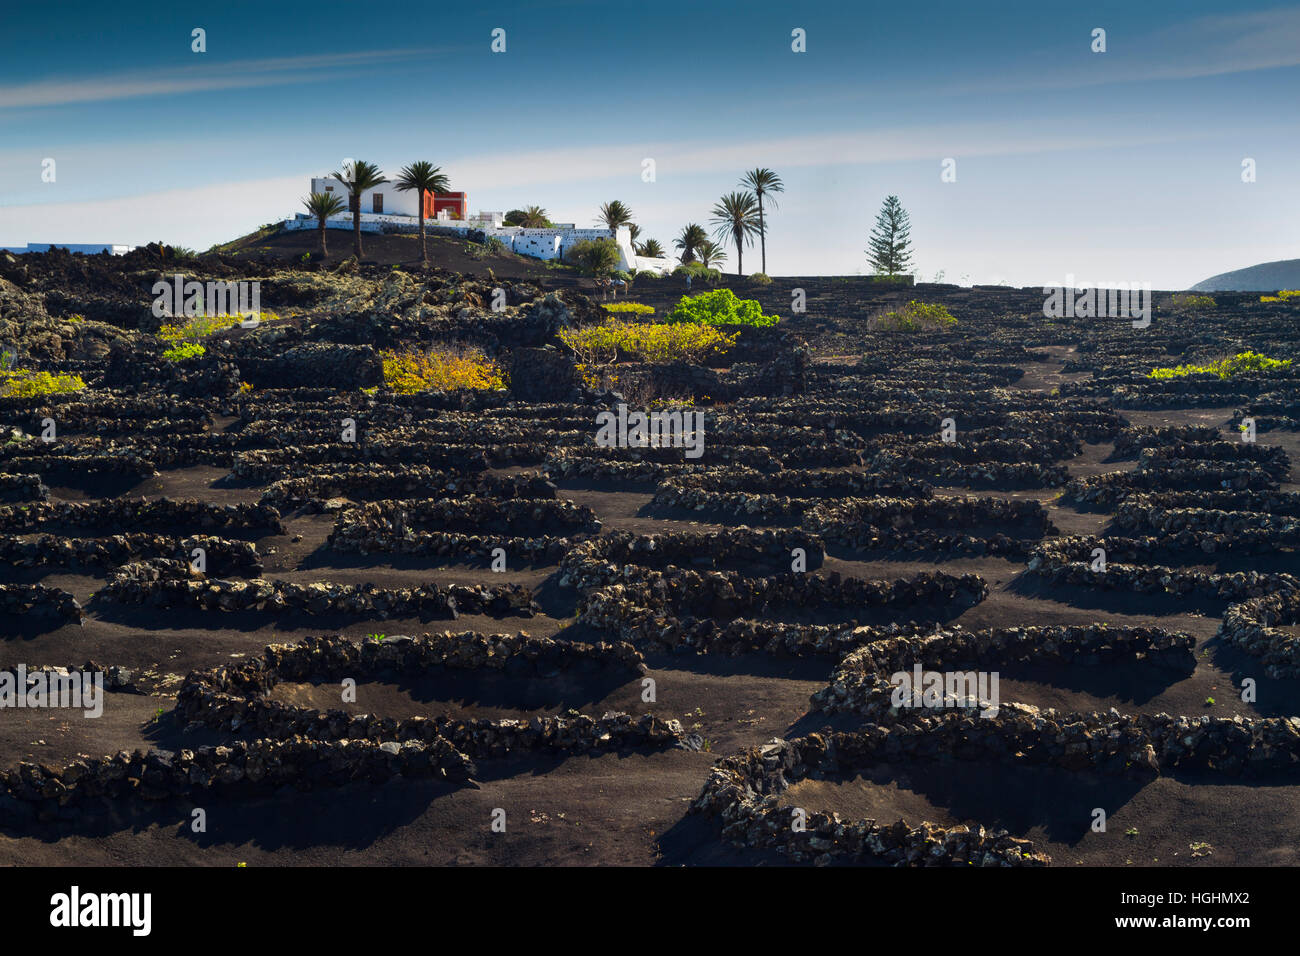 Vines growing in volcanic lapilli. La Geria region. Lanzarote, Canary Islands, Atlantic Ocean, Spain. Stock Photo